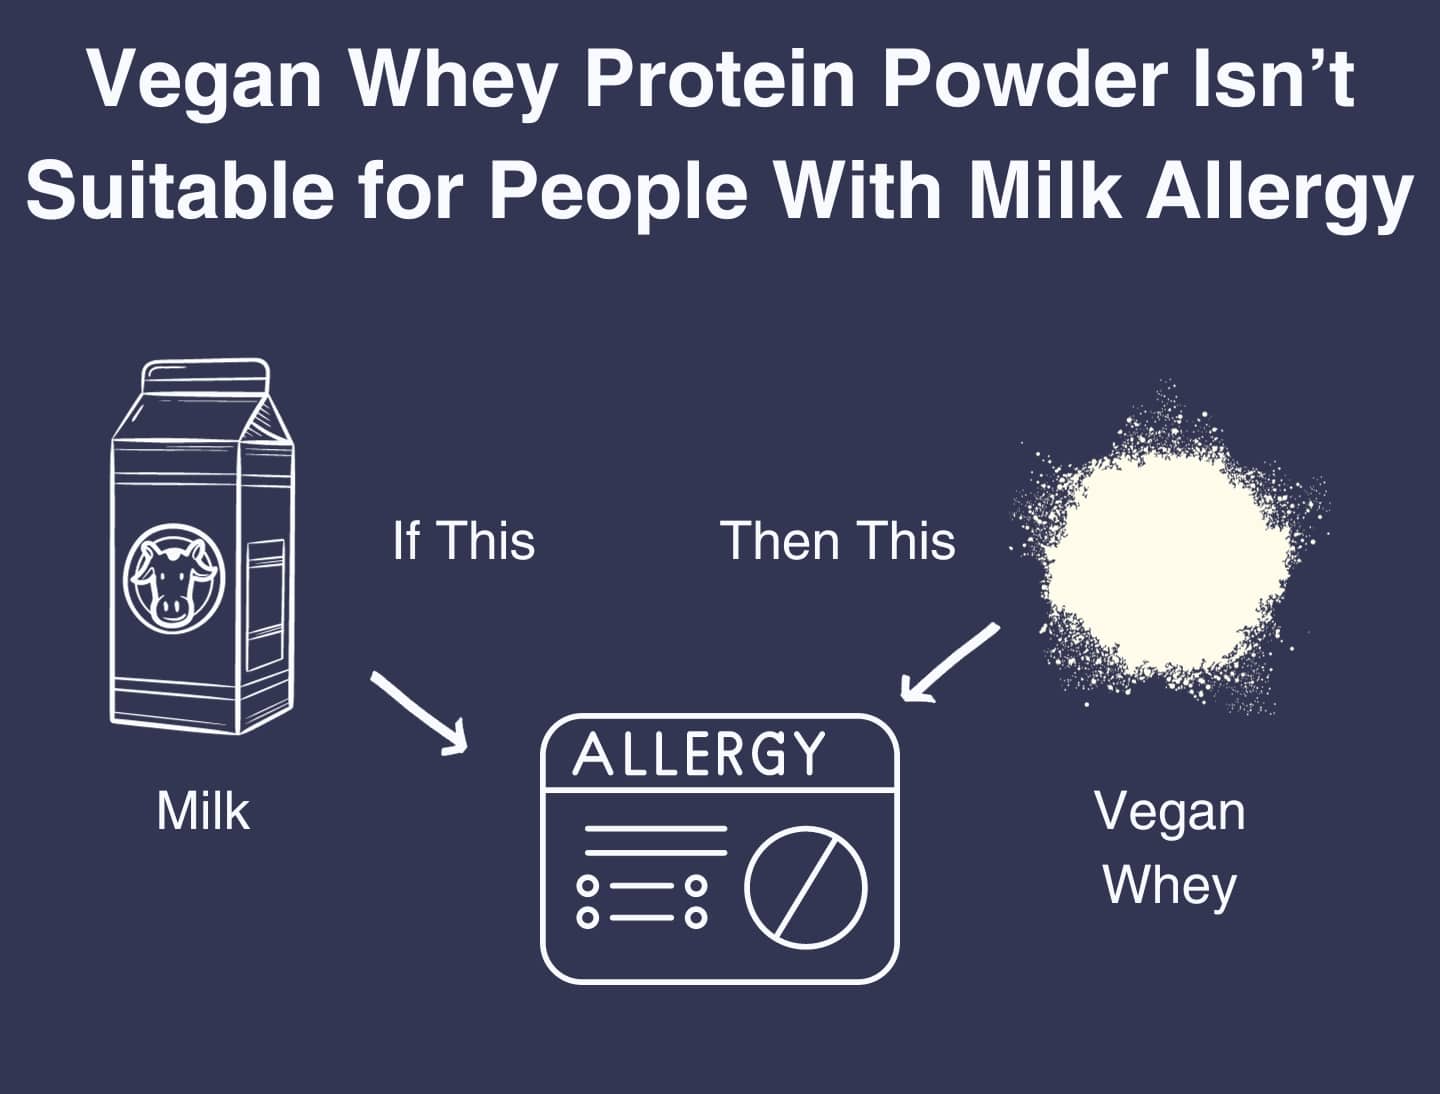 This image shows that vegan whey is a milk allergen.